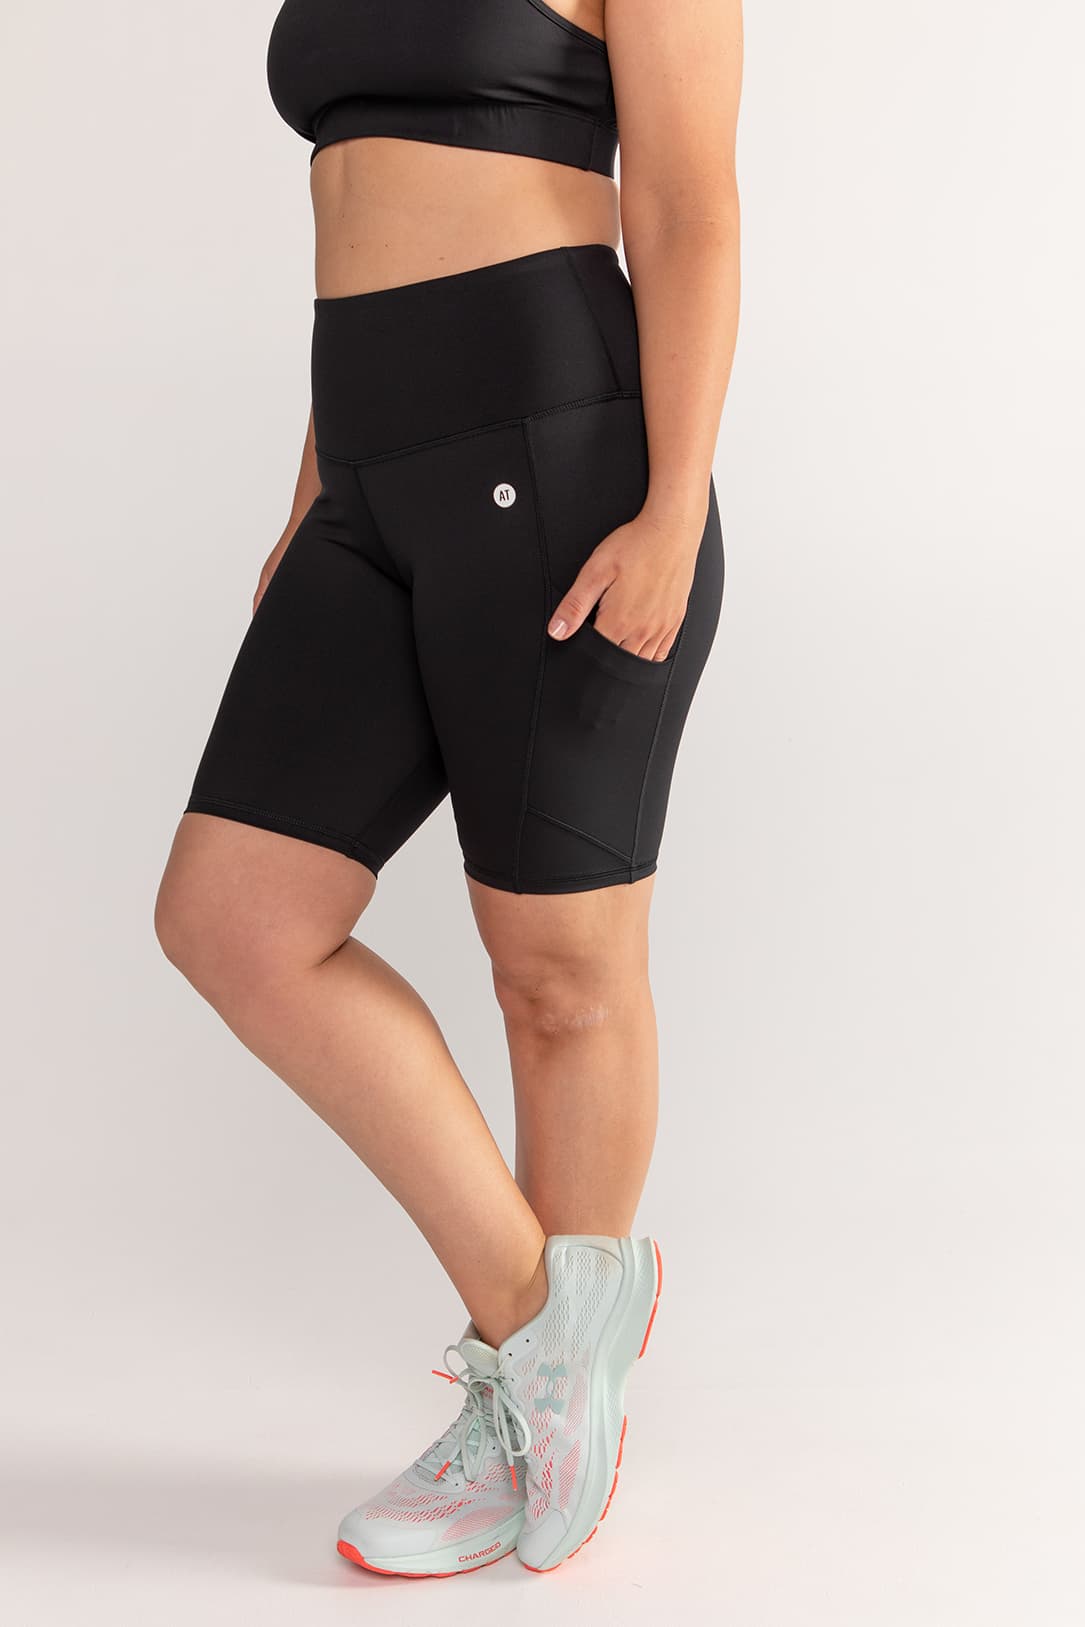 Smart Pocket Bike Shorts - Black, Gym Shorts, Active Truth